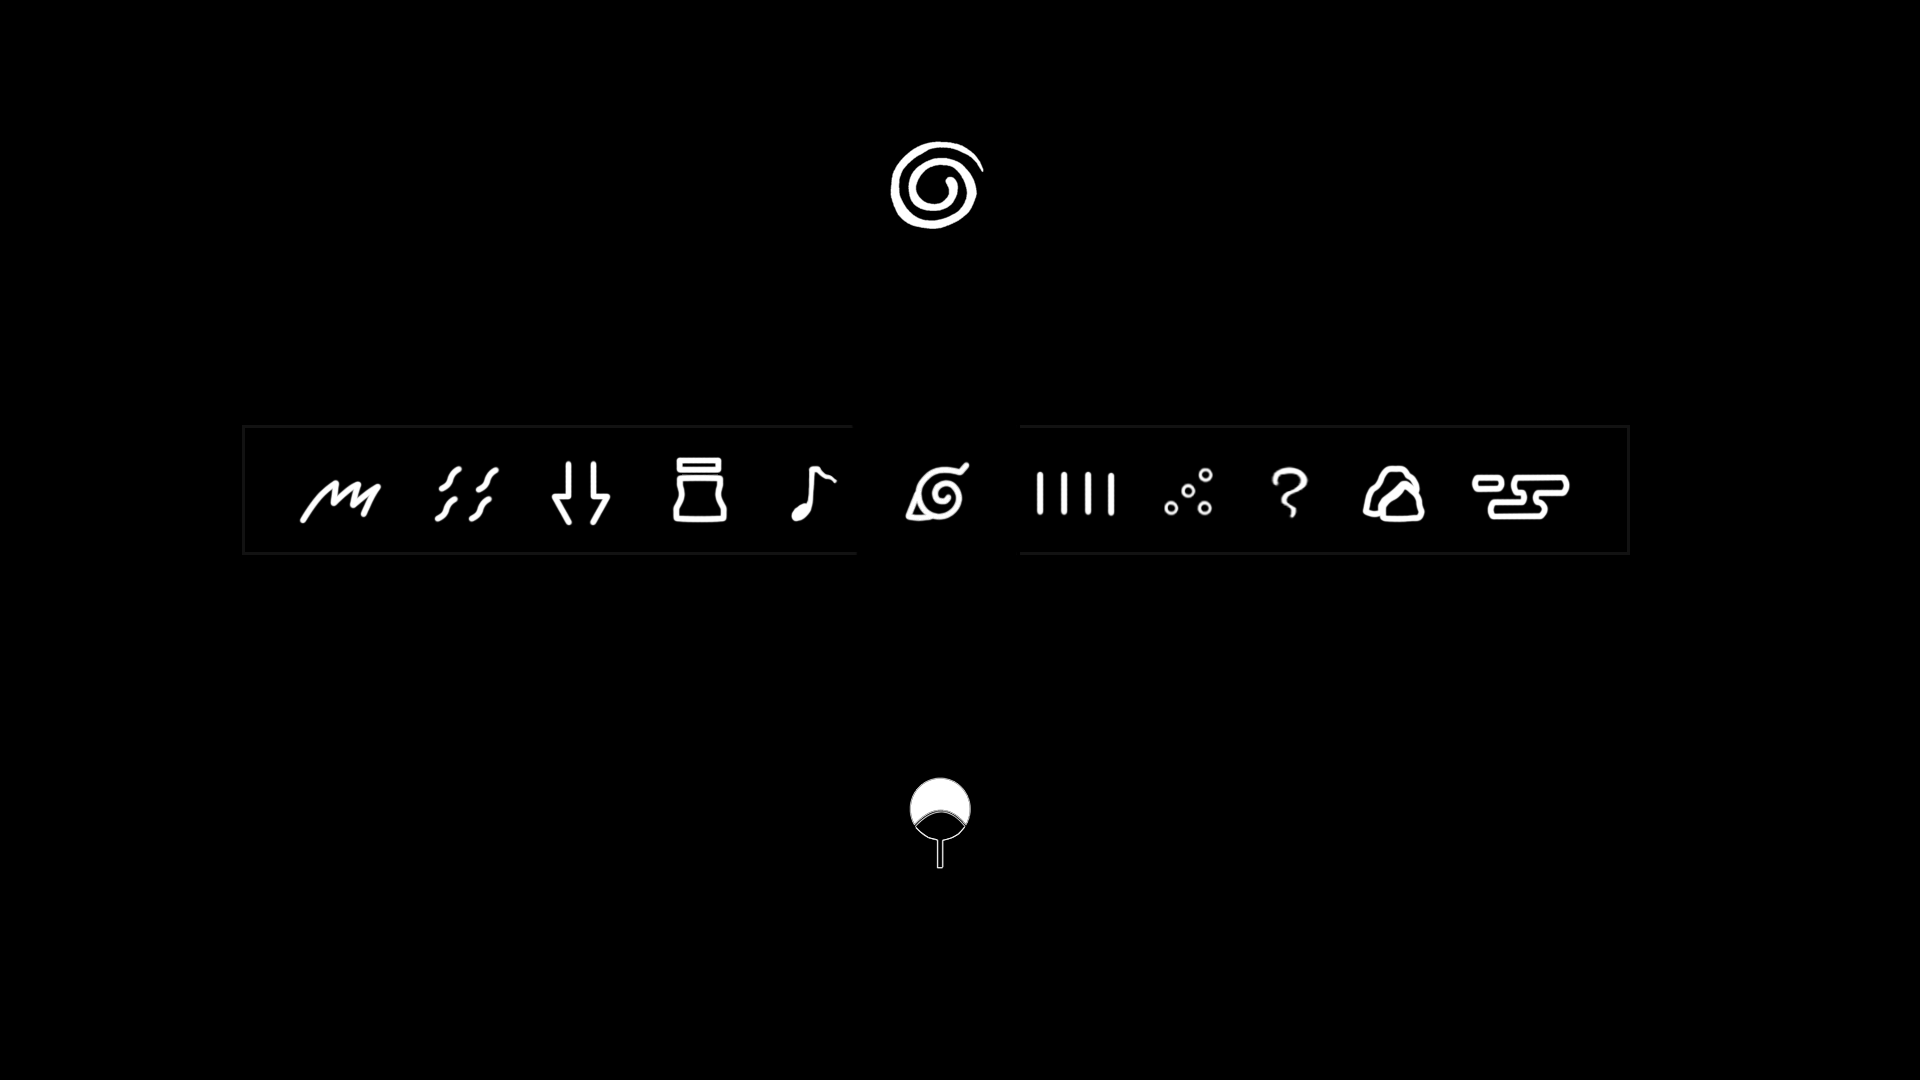 Naruto Symbols iPhone Wallpapers on WallpaperDog